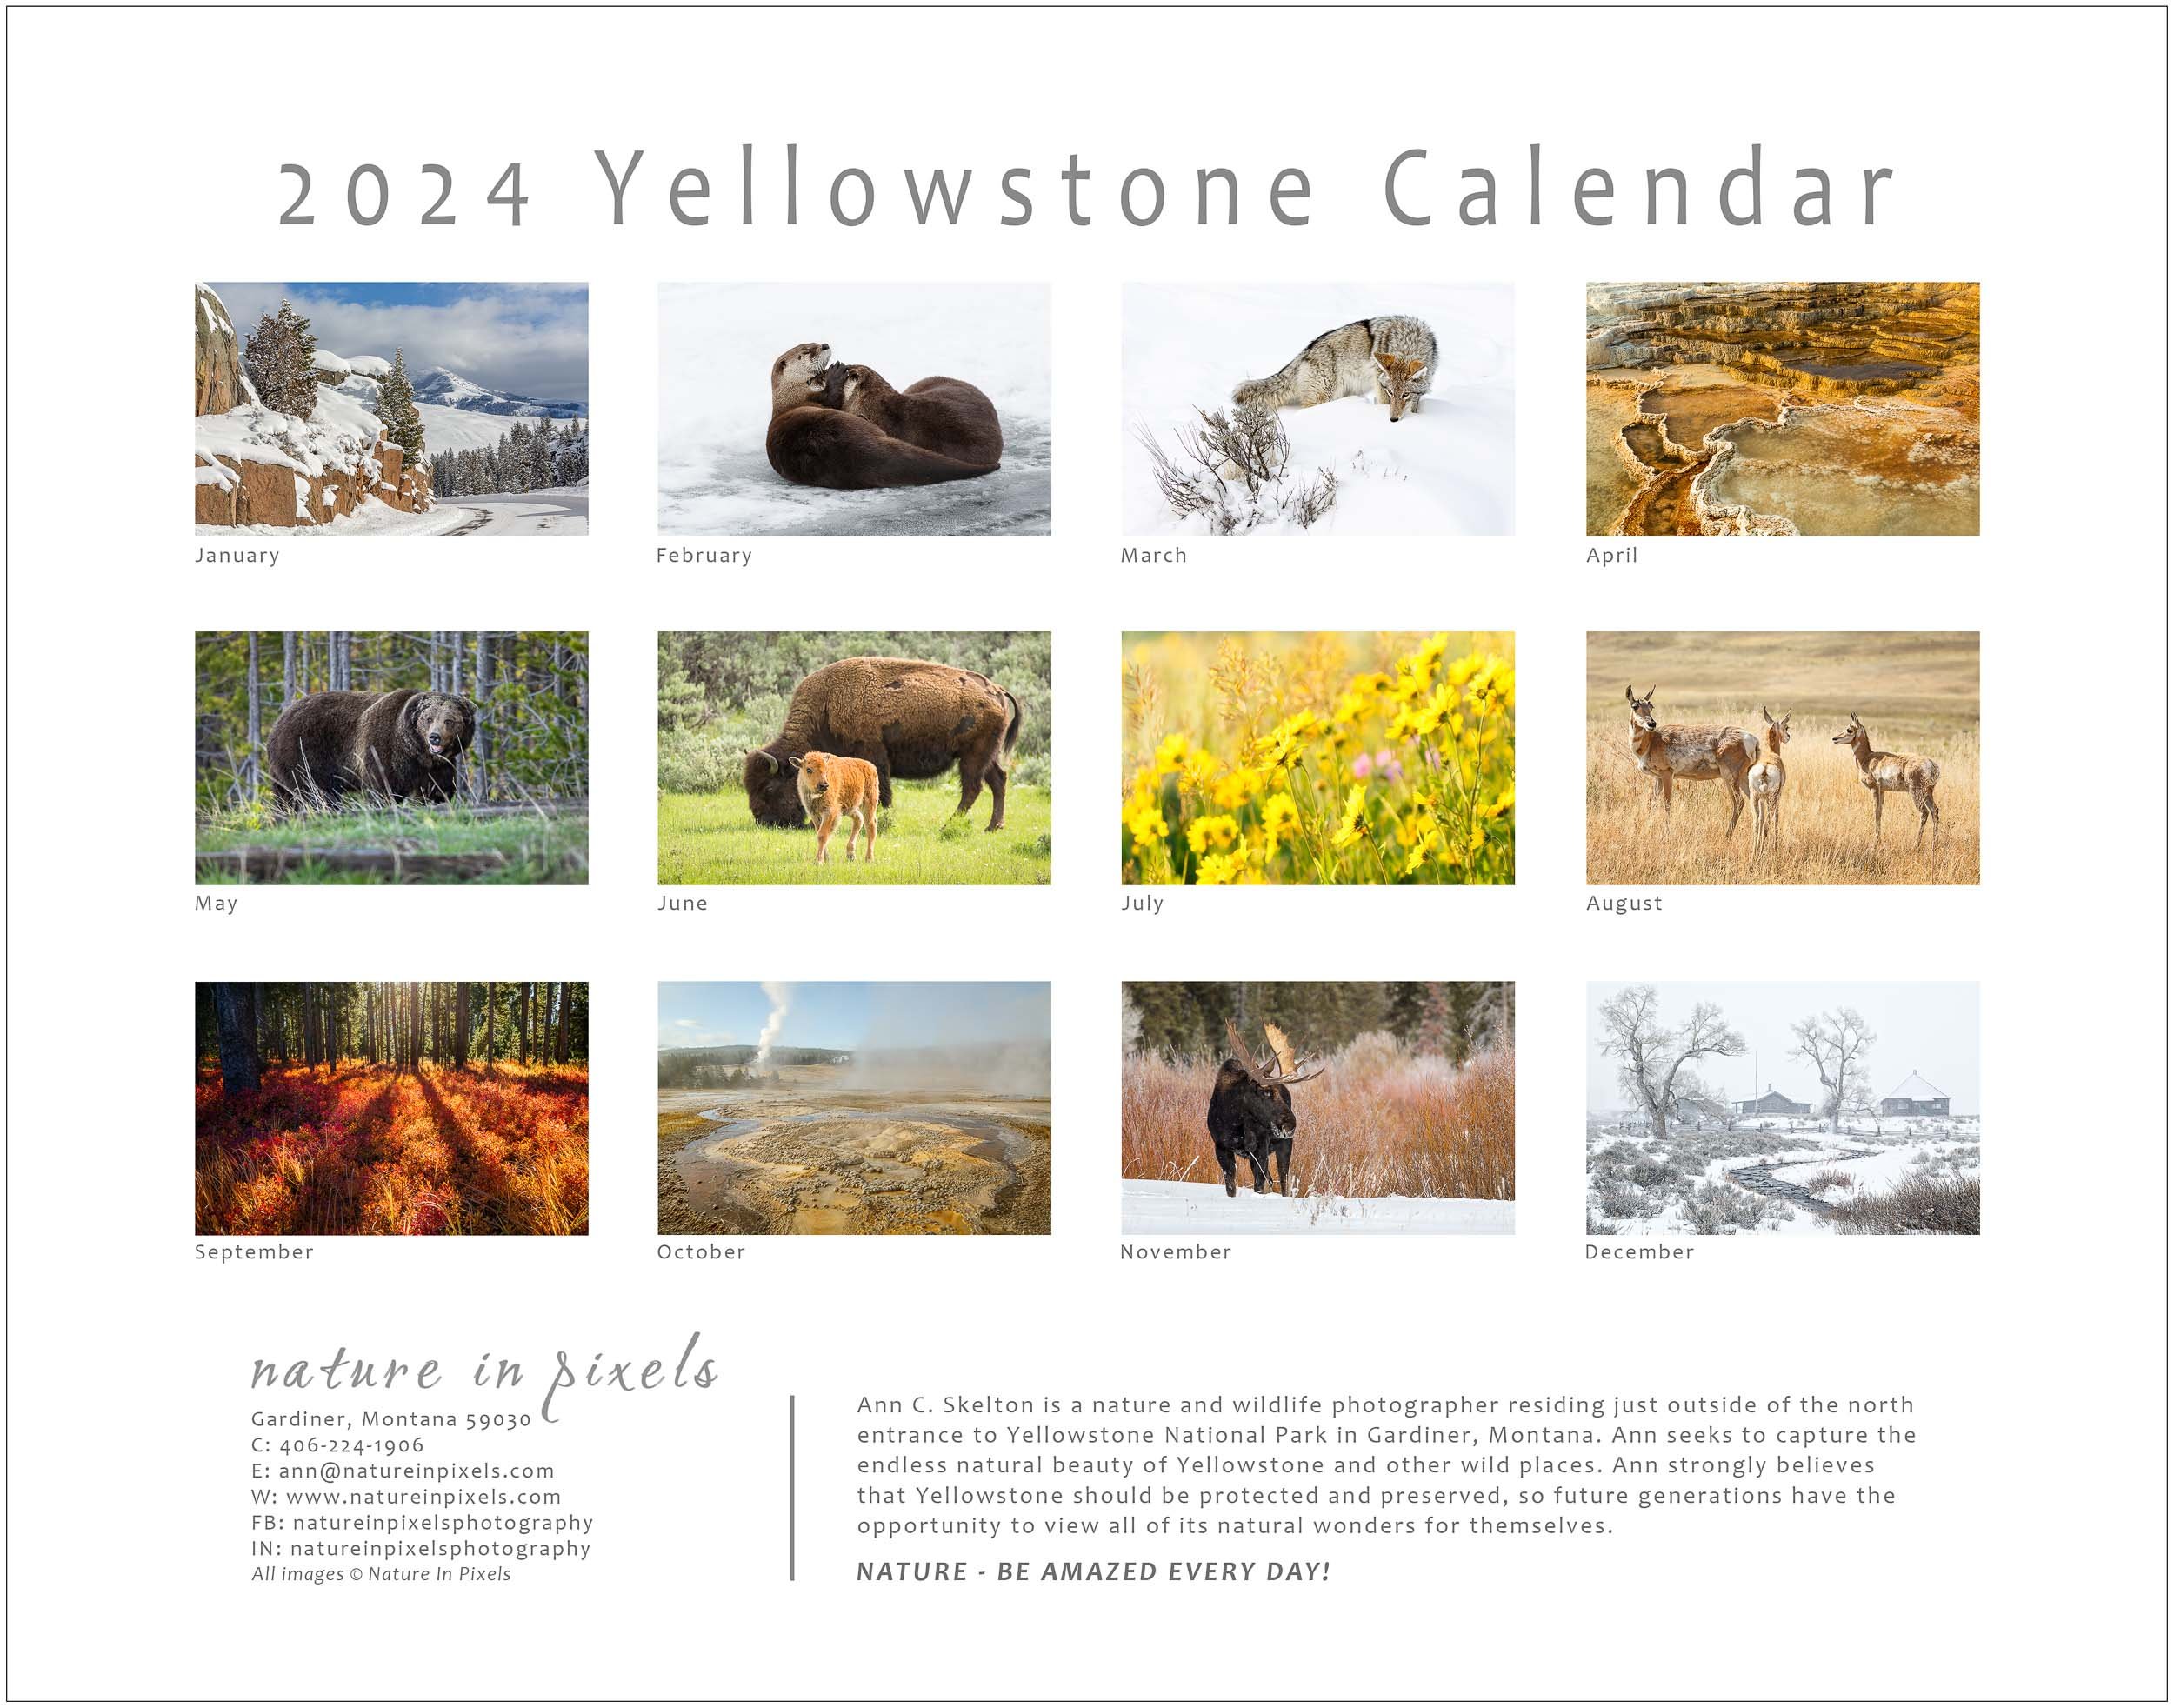 2024-yellowstone-calendar-yellowstone-wonders-llc